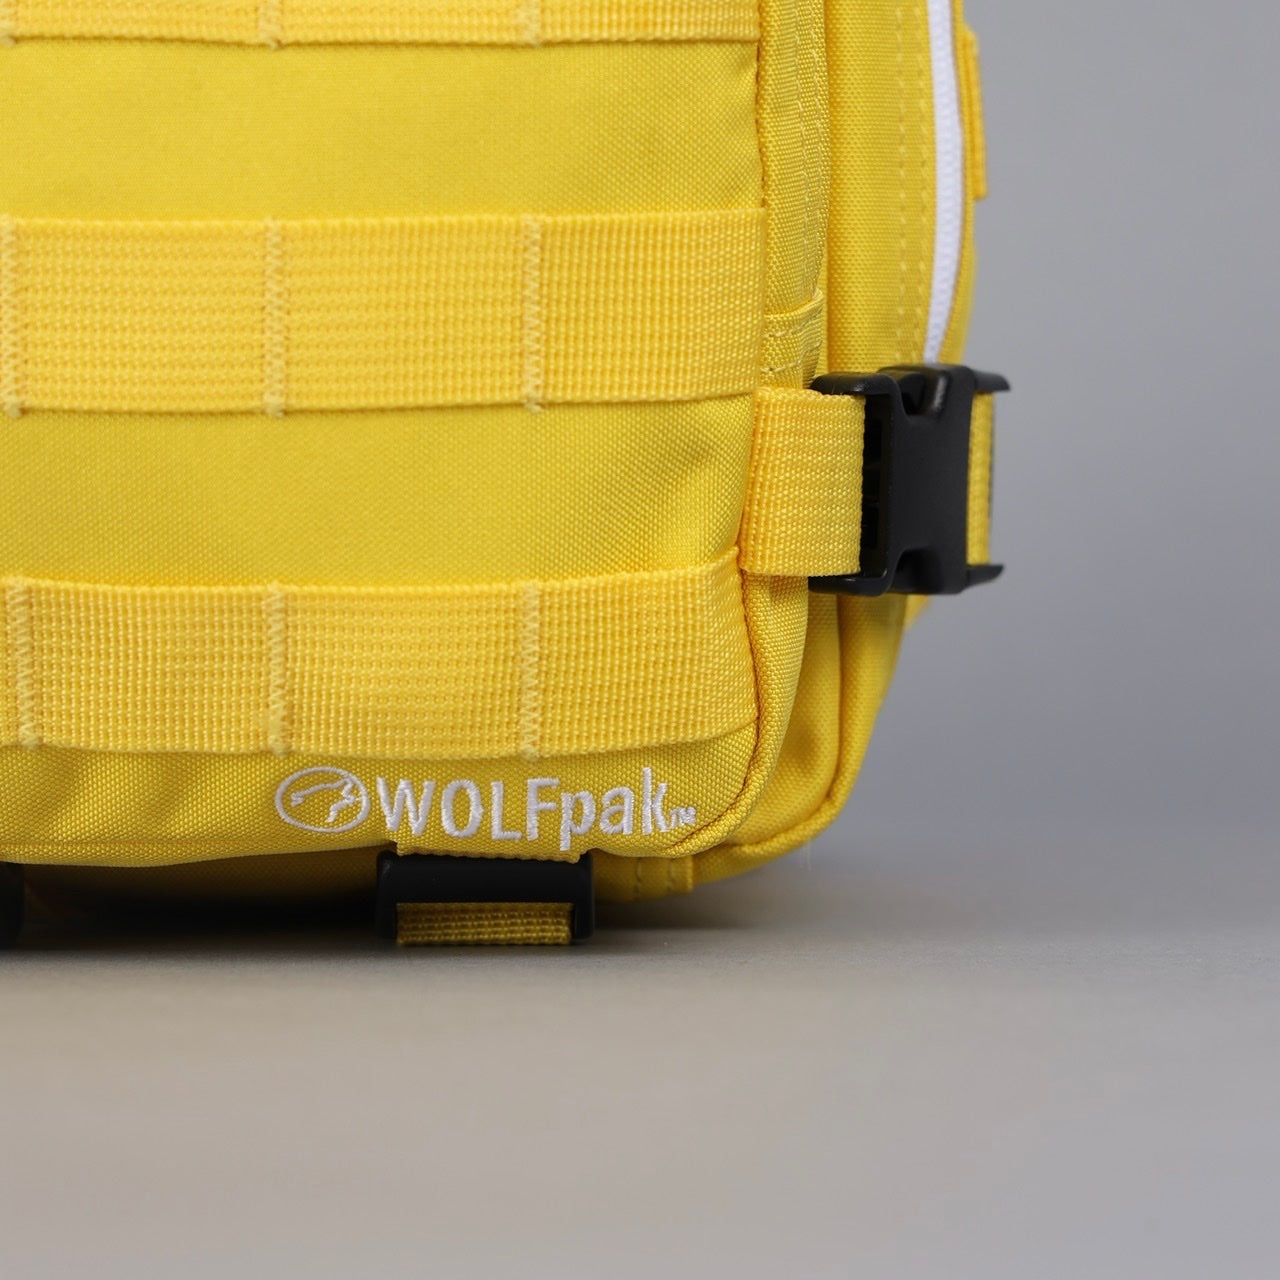 9L Backpack Mini Sunkiss Yellow